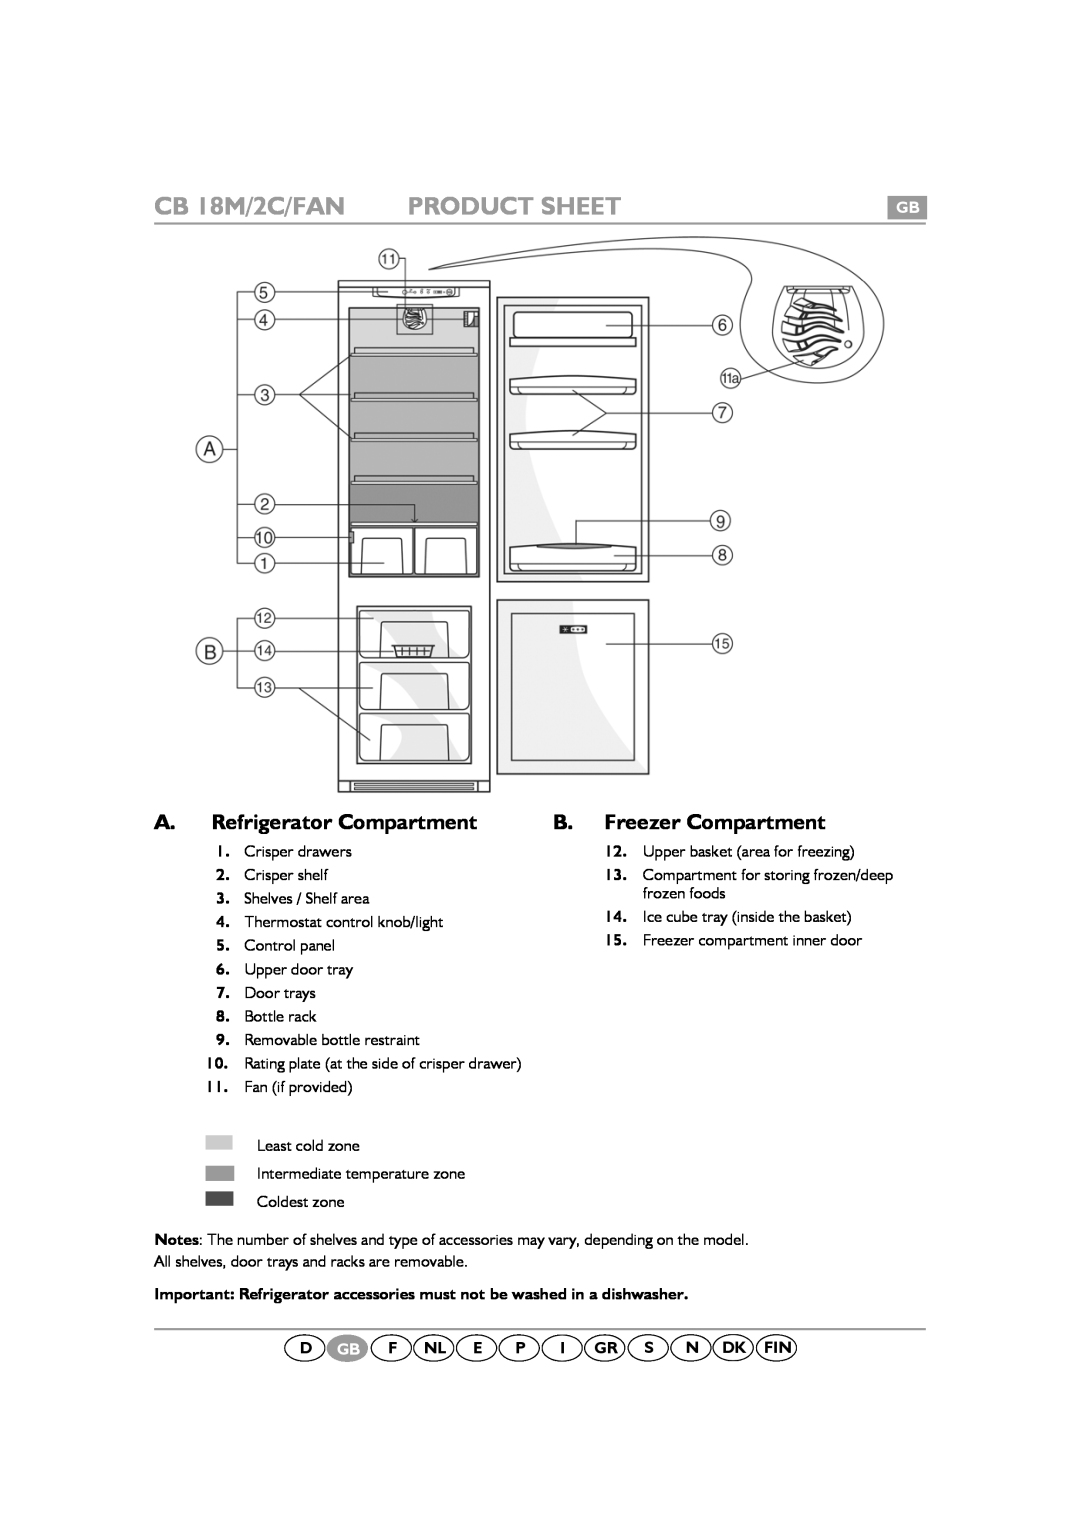 Smeg CR326AP7 manual CB 18M/2C/FAN, A.Refrigerator Compartment, B.Freezer Compartment, D Gb F Nl E P I Gr S N Dk Fin 